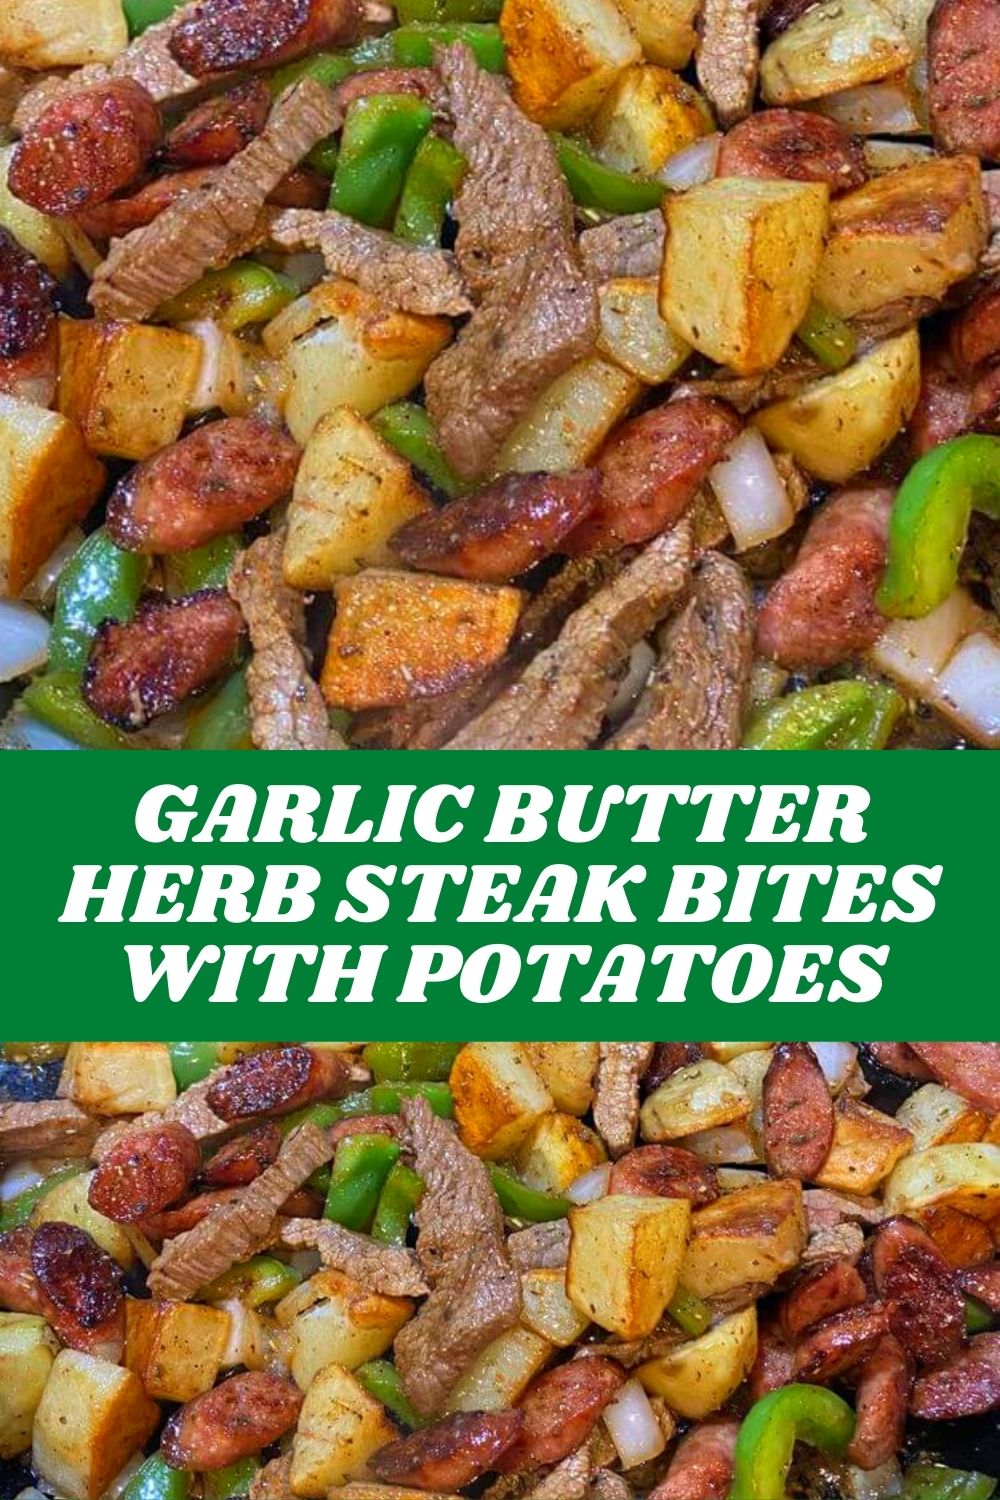 GARLIC BUTTER HERB STEAK BITES WITH POTATOES #recipes #foodrecipes #easyrecipes